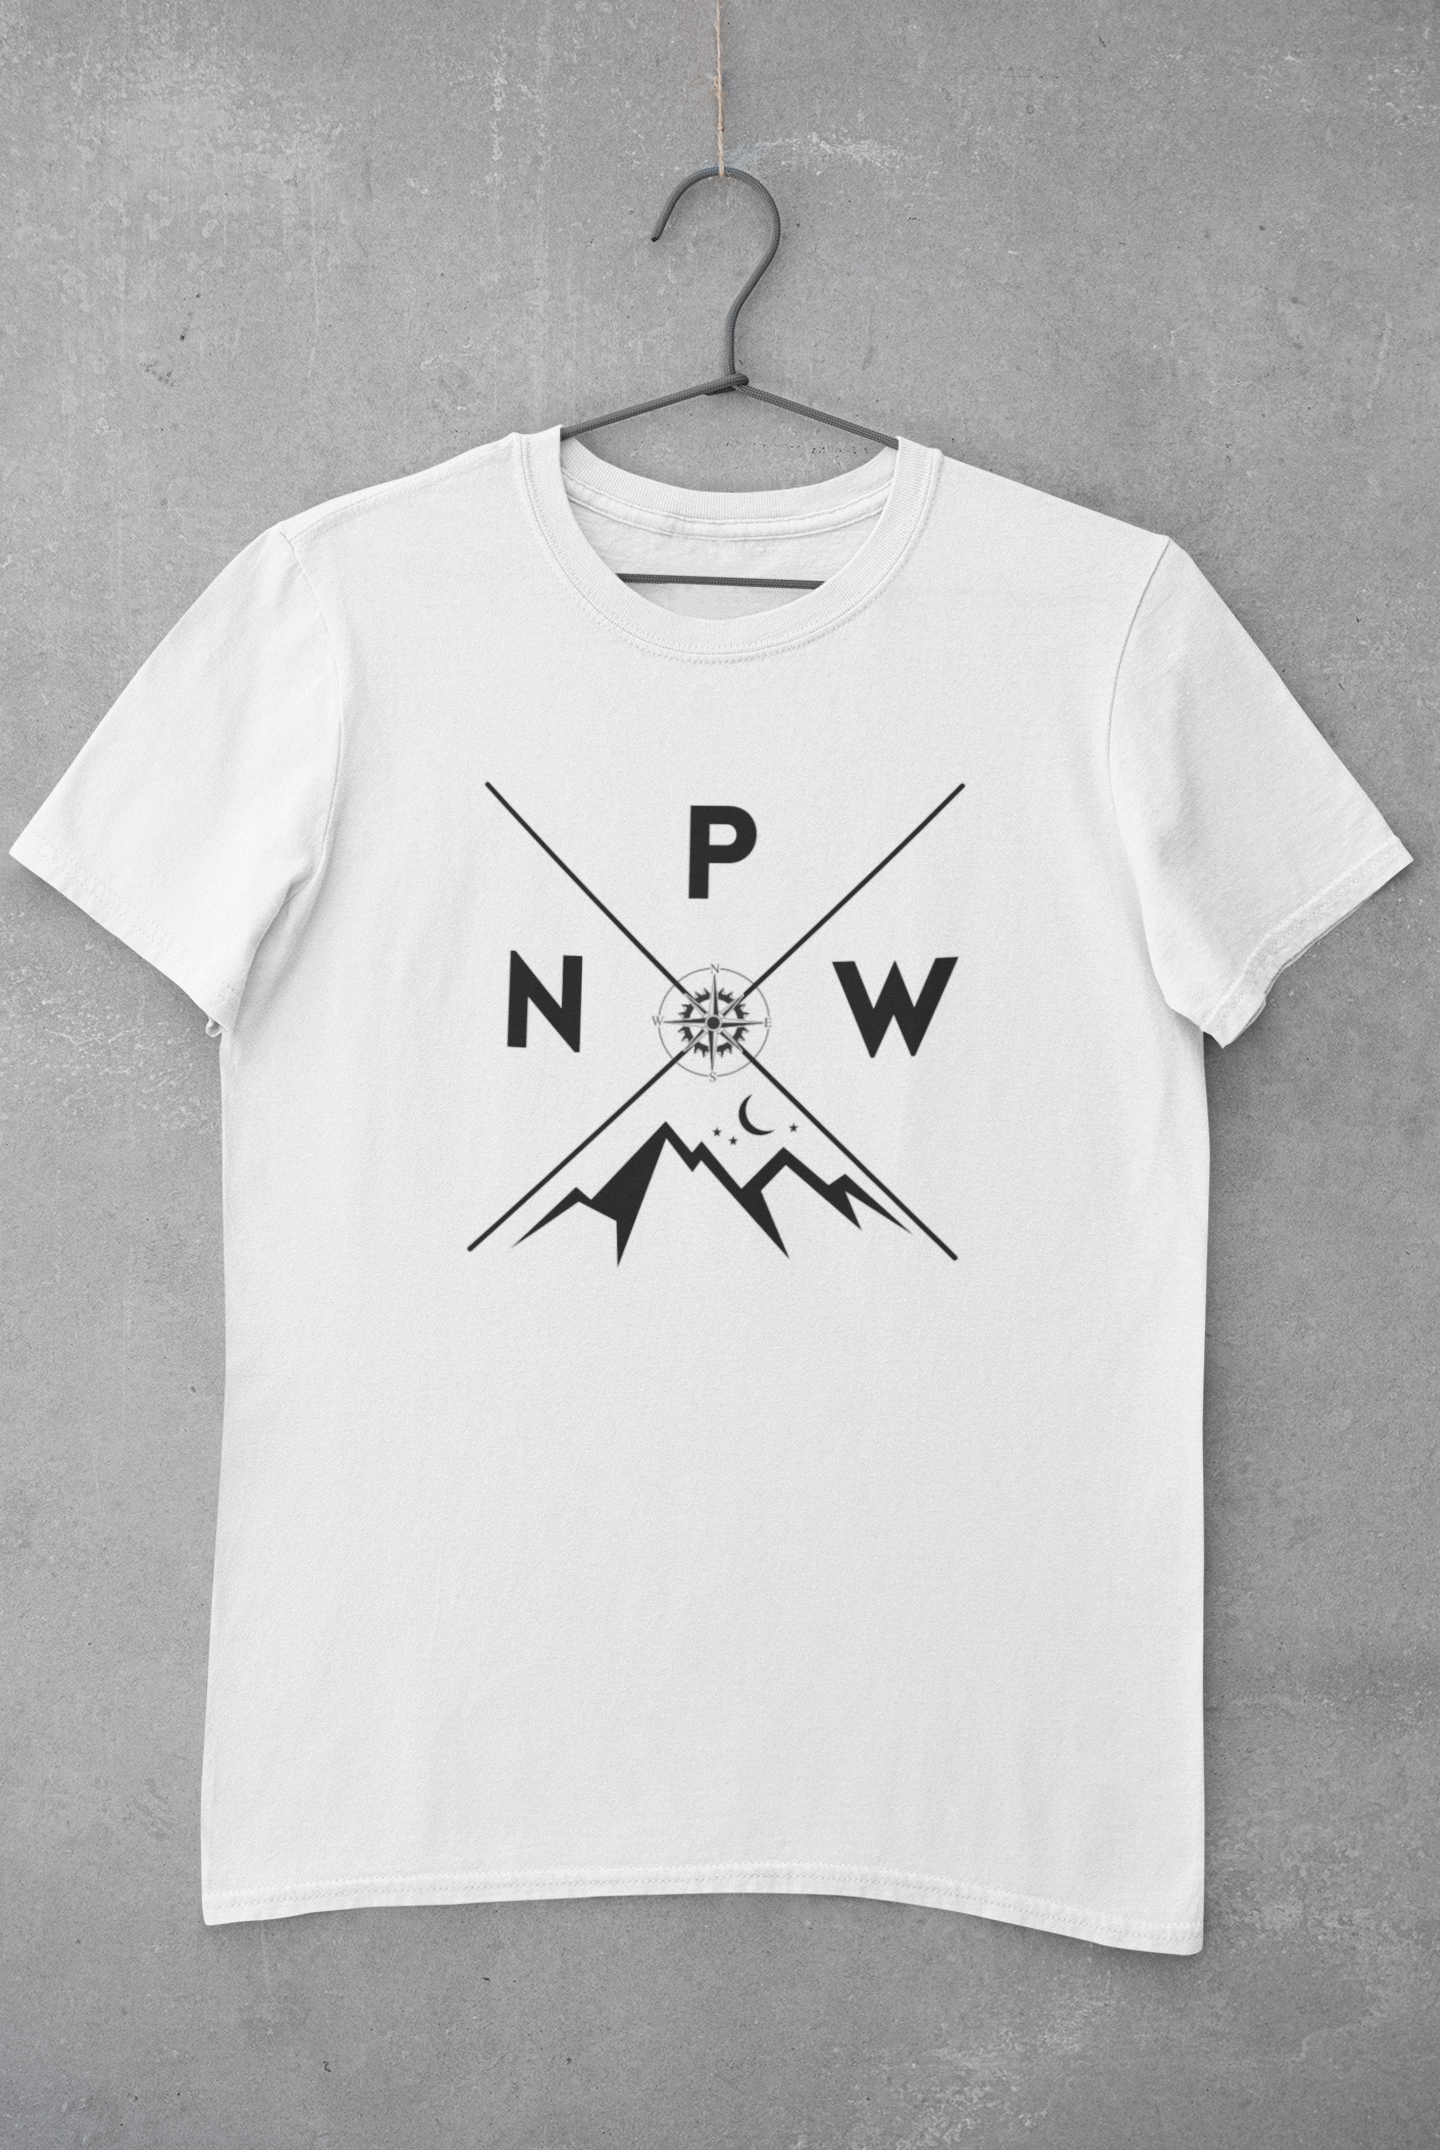 PNW Men's Shirt